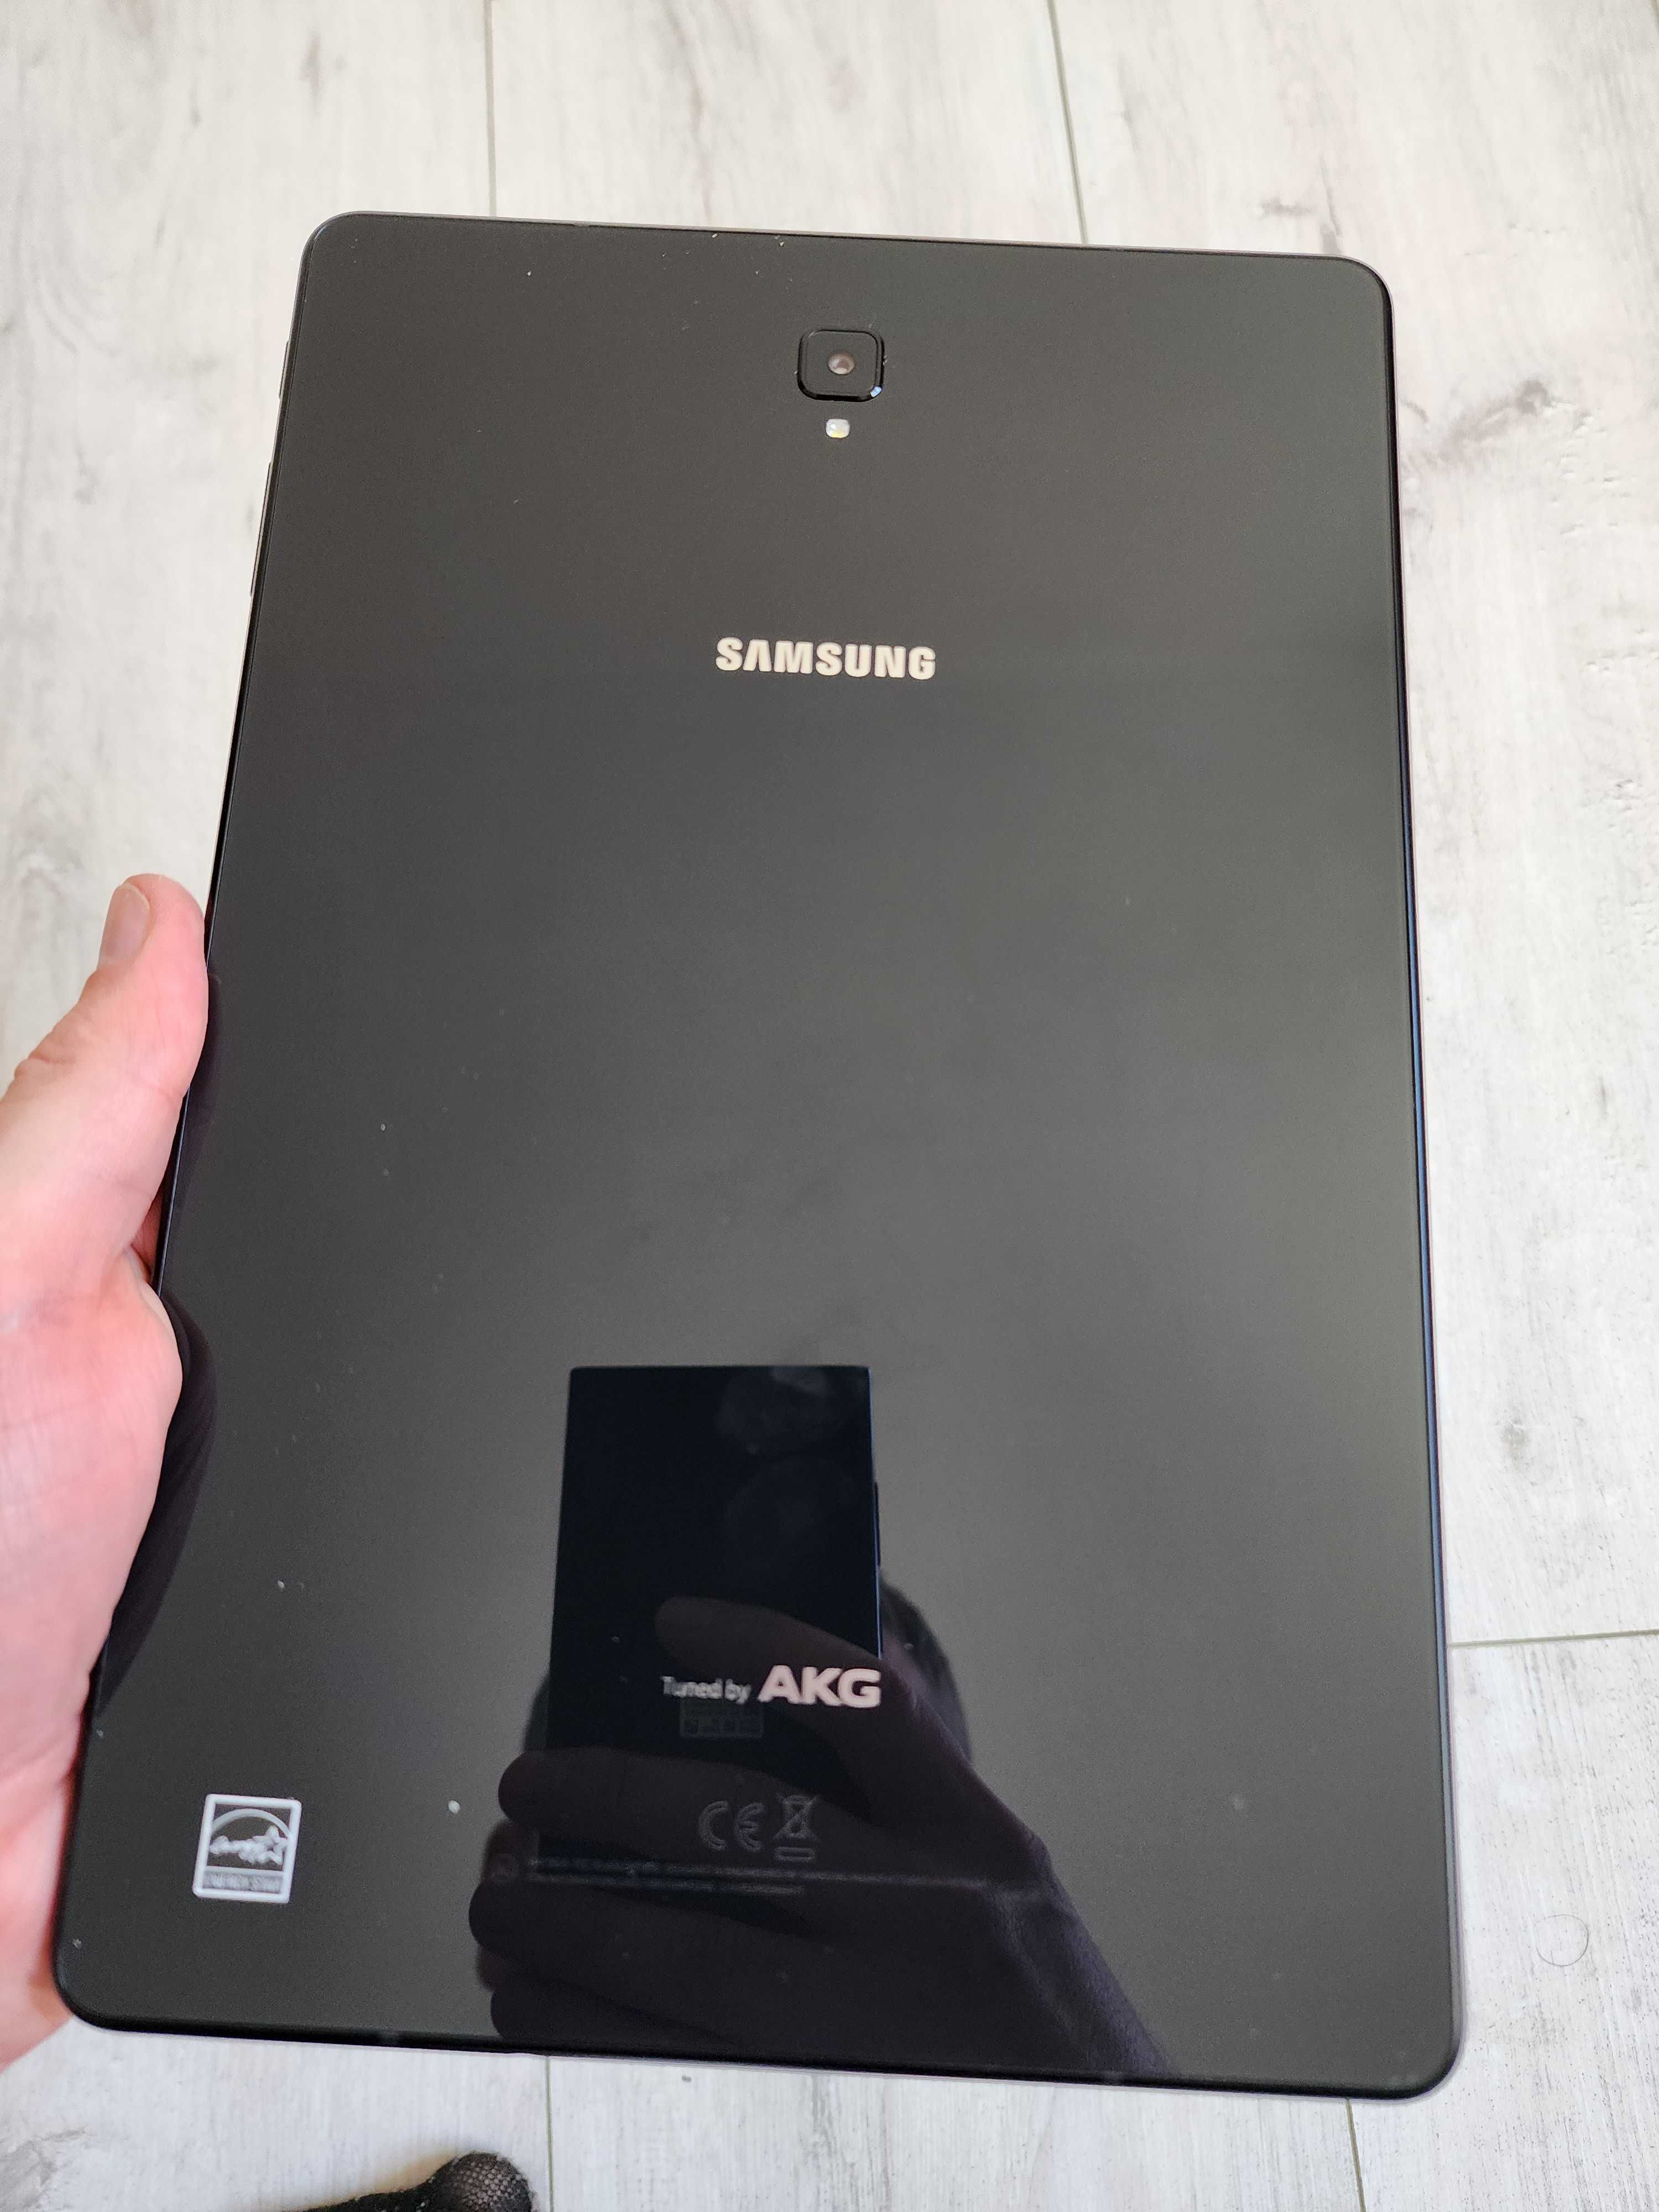 Samsung Galaxy Tab S4 10.5" 64GB Gray SM-T830 WI-FI